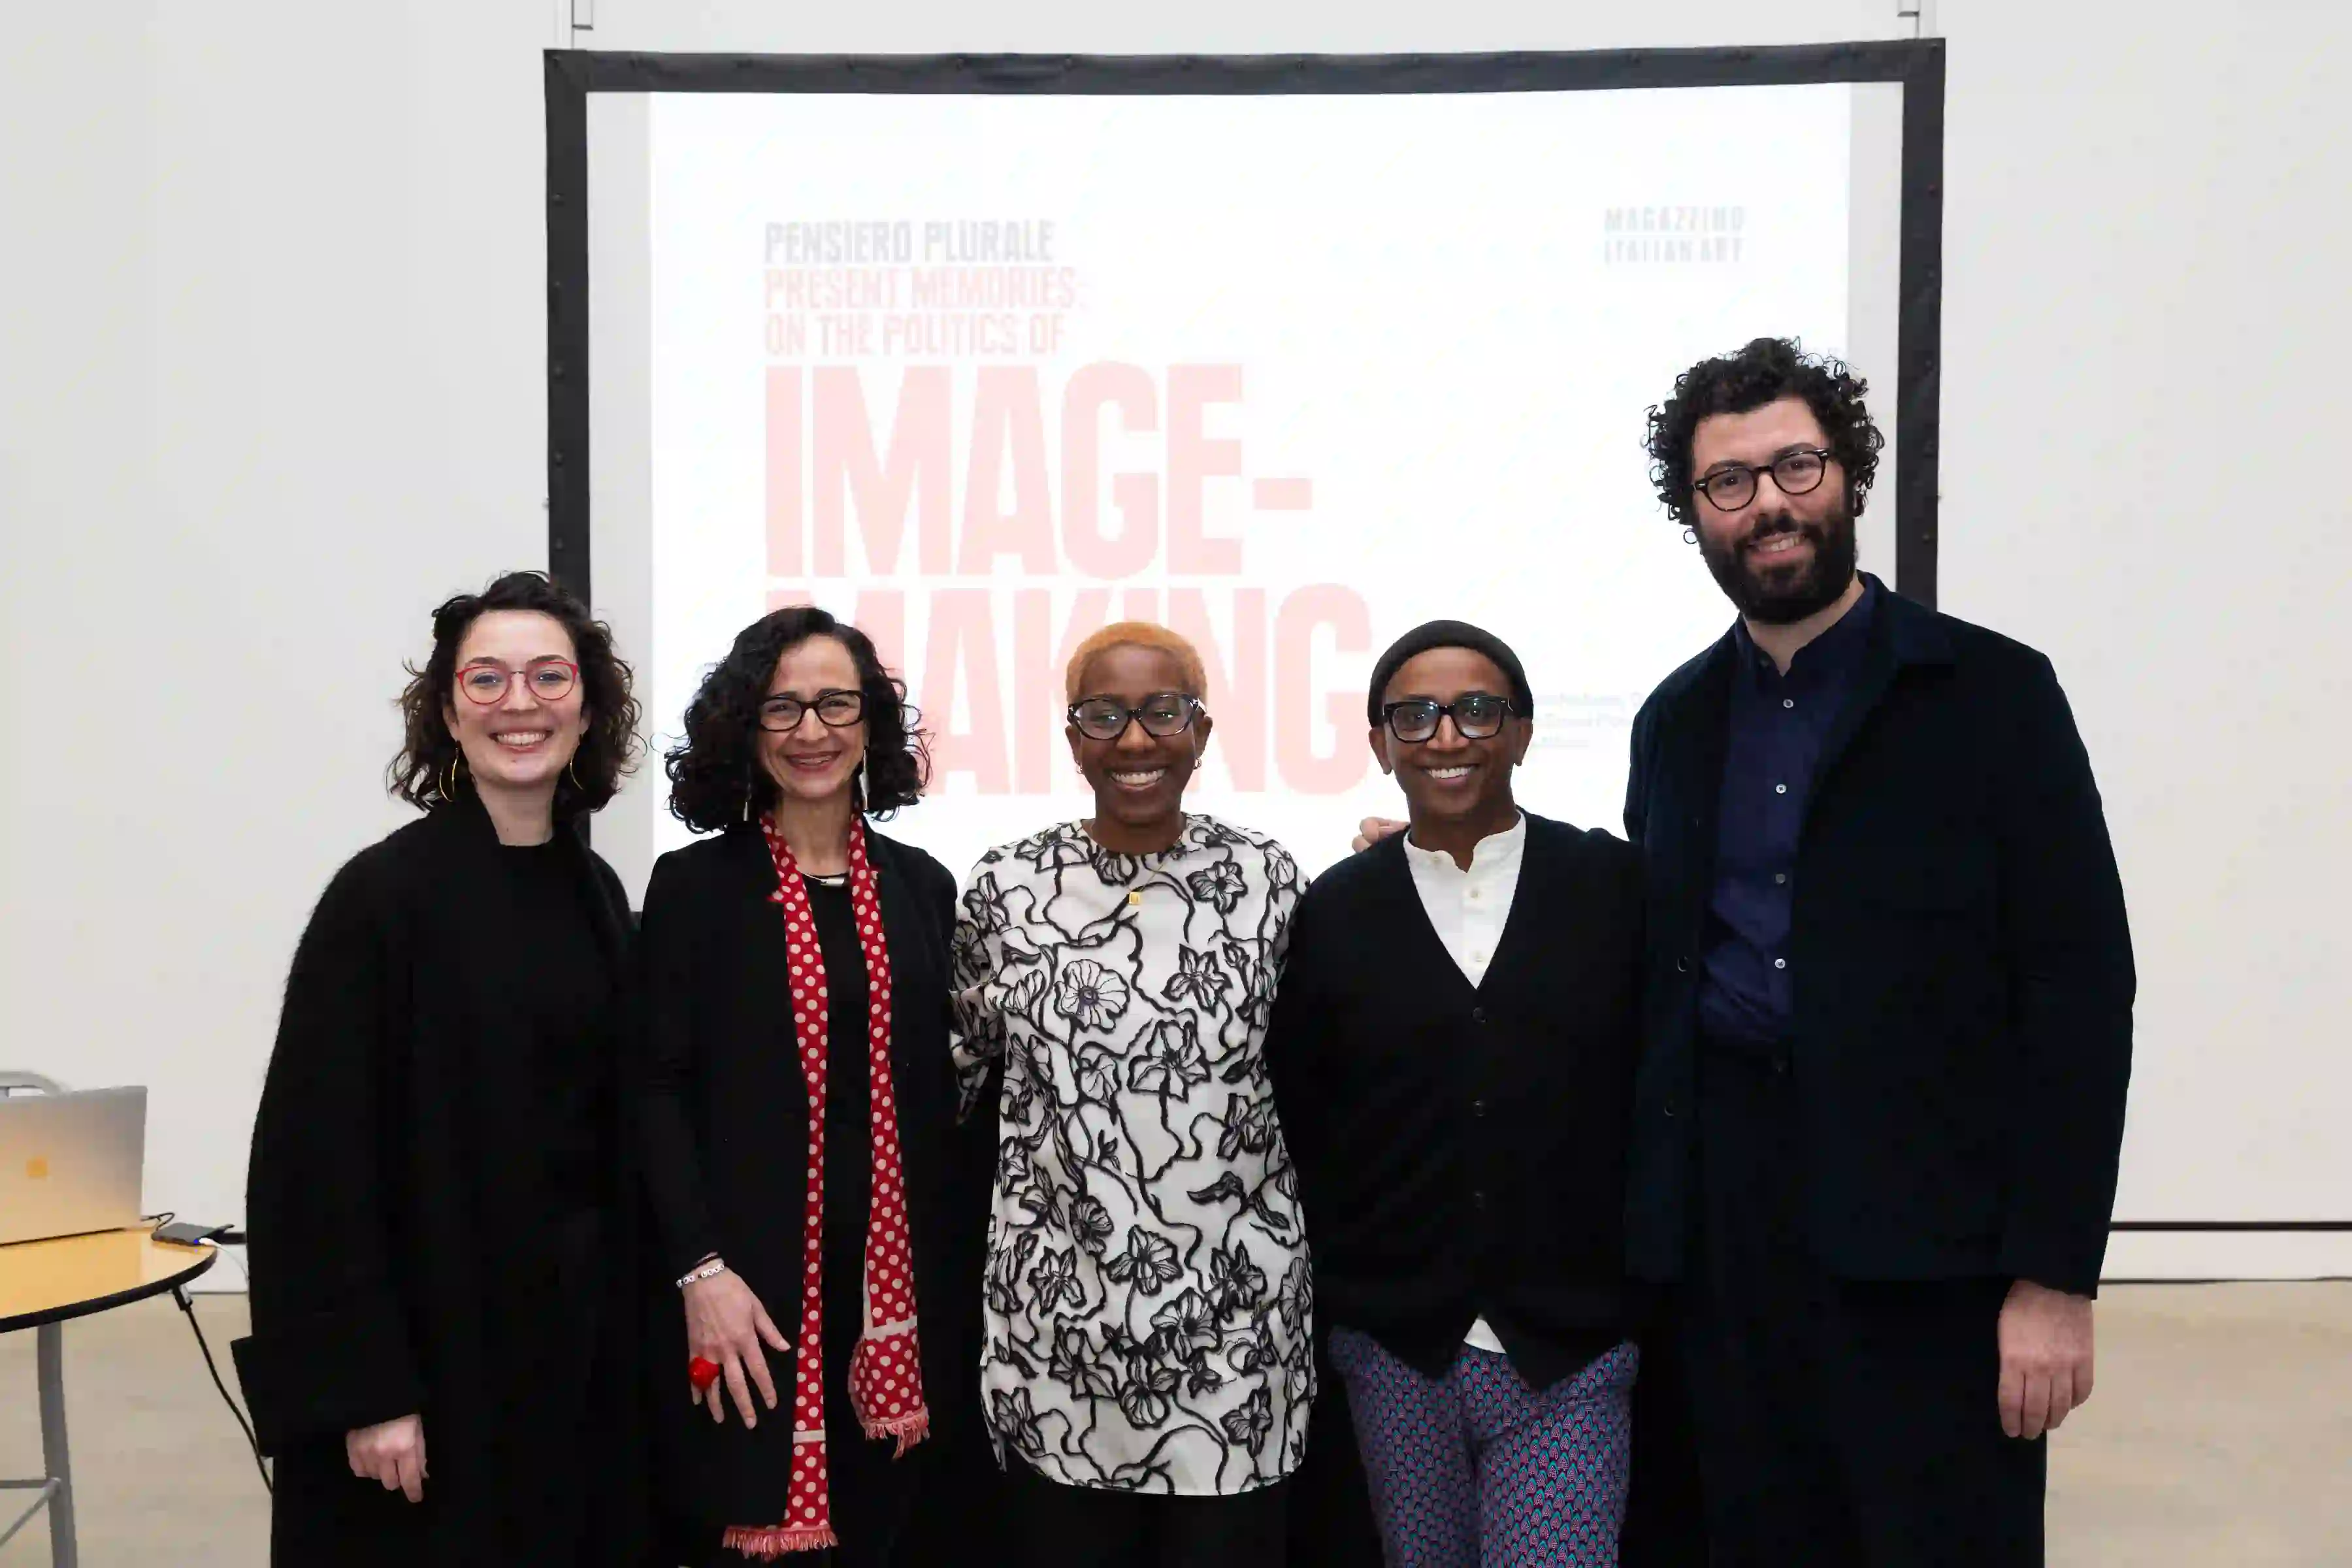 Left to right: Ilaria Conti, Teresa Fiore, Mistura Allison, Dawit L. Petros, Vittorio Calabrese. Photo by Alexa Hoyer